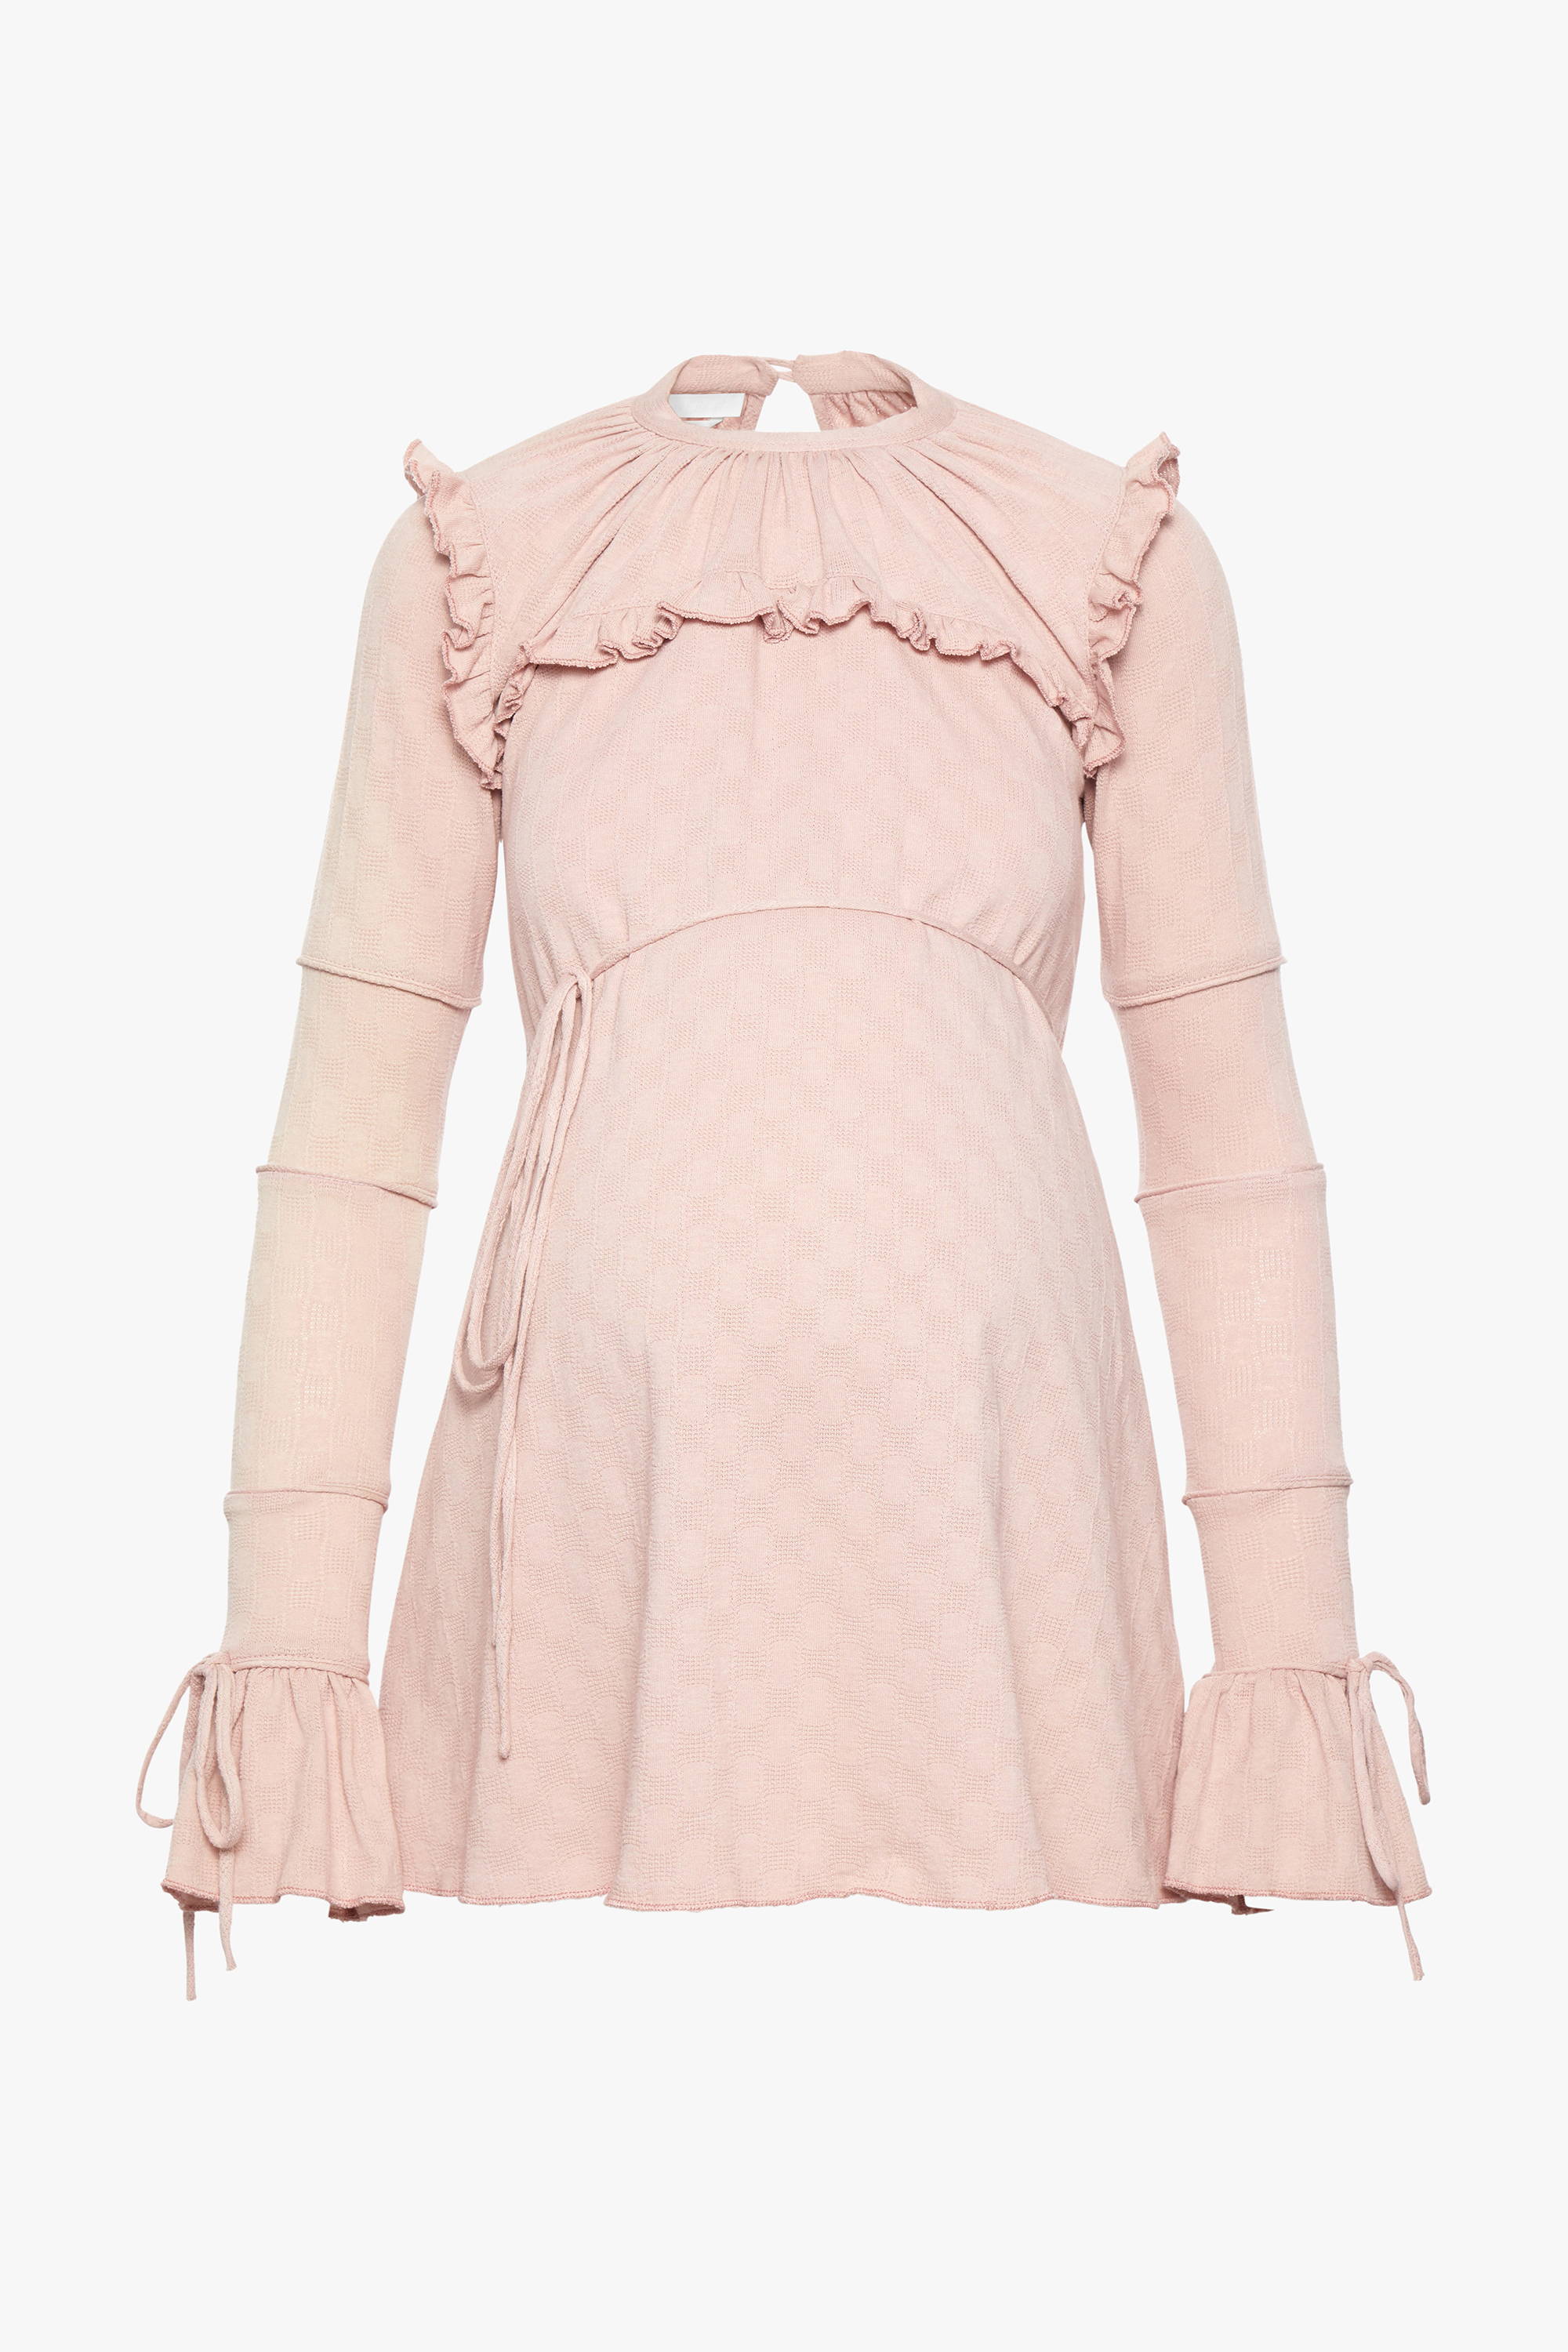 The maternity friendly Wonderland dress in rose checkboard knit